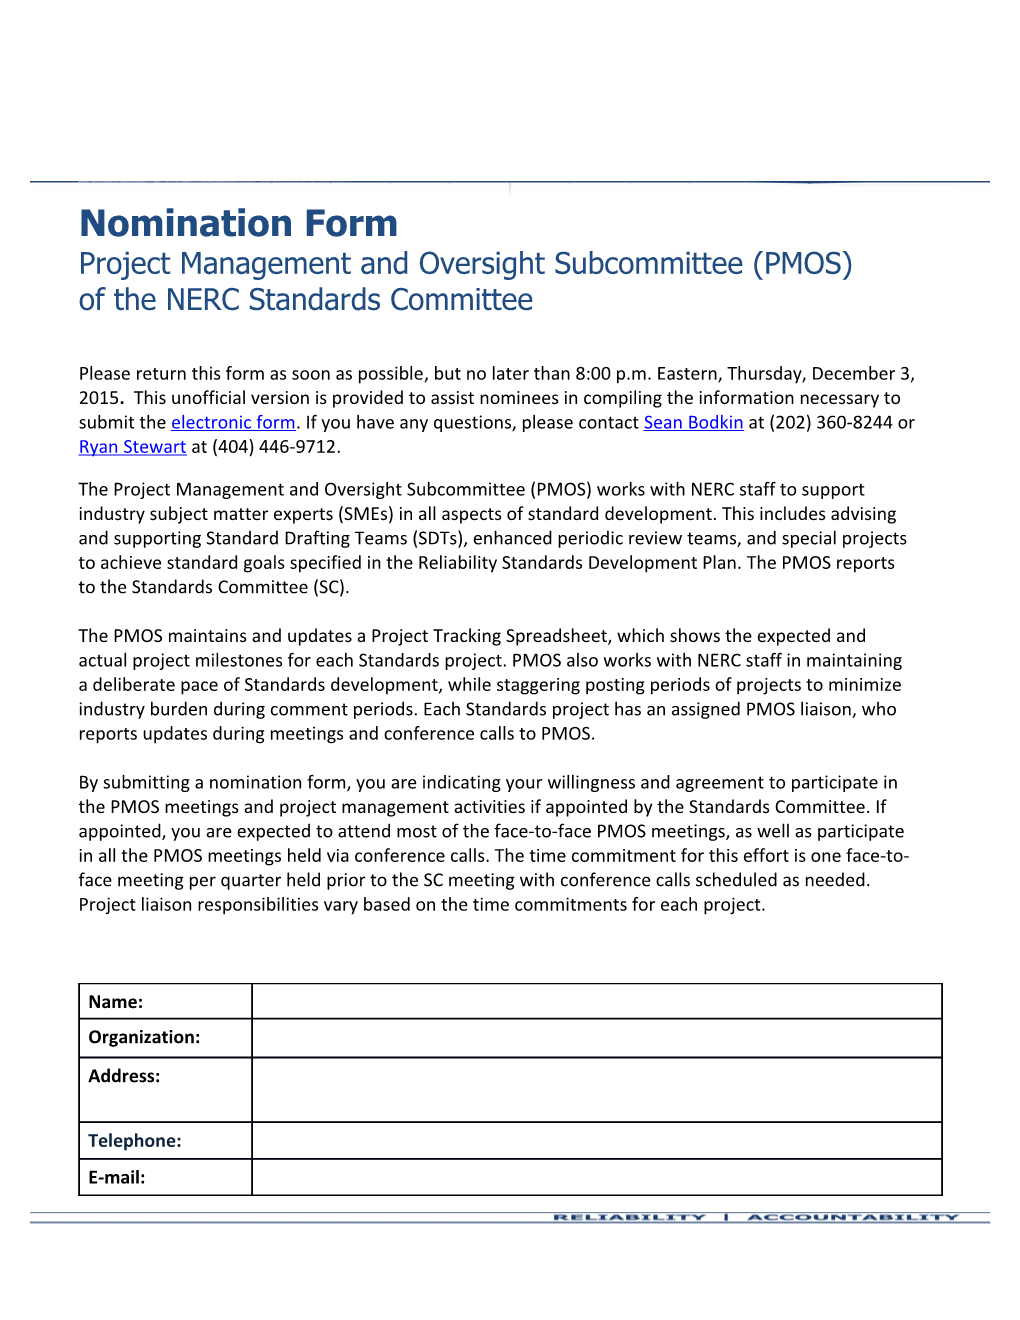 PMOS Nomination Form November 2015